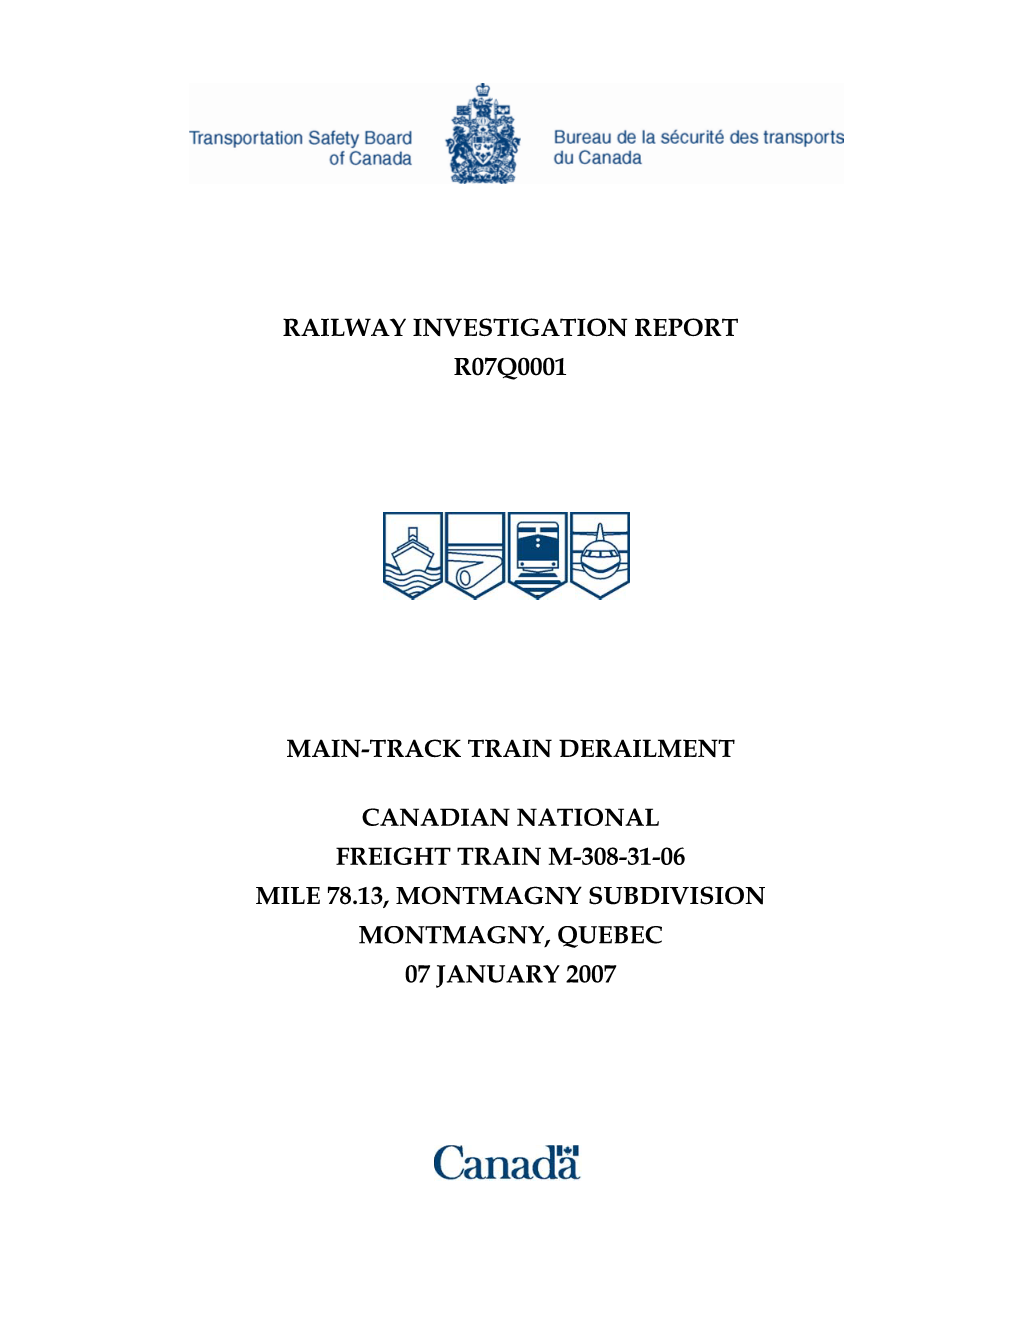 Railway Investigation Report R07q0001 Main-Track Train